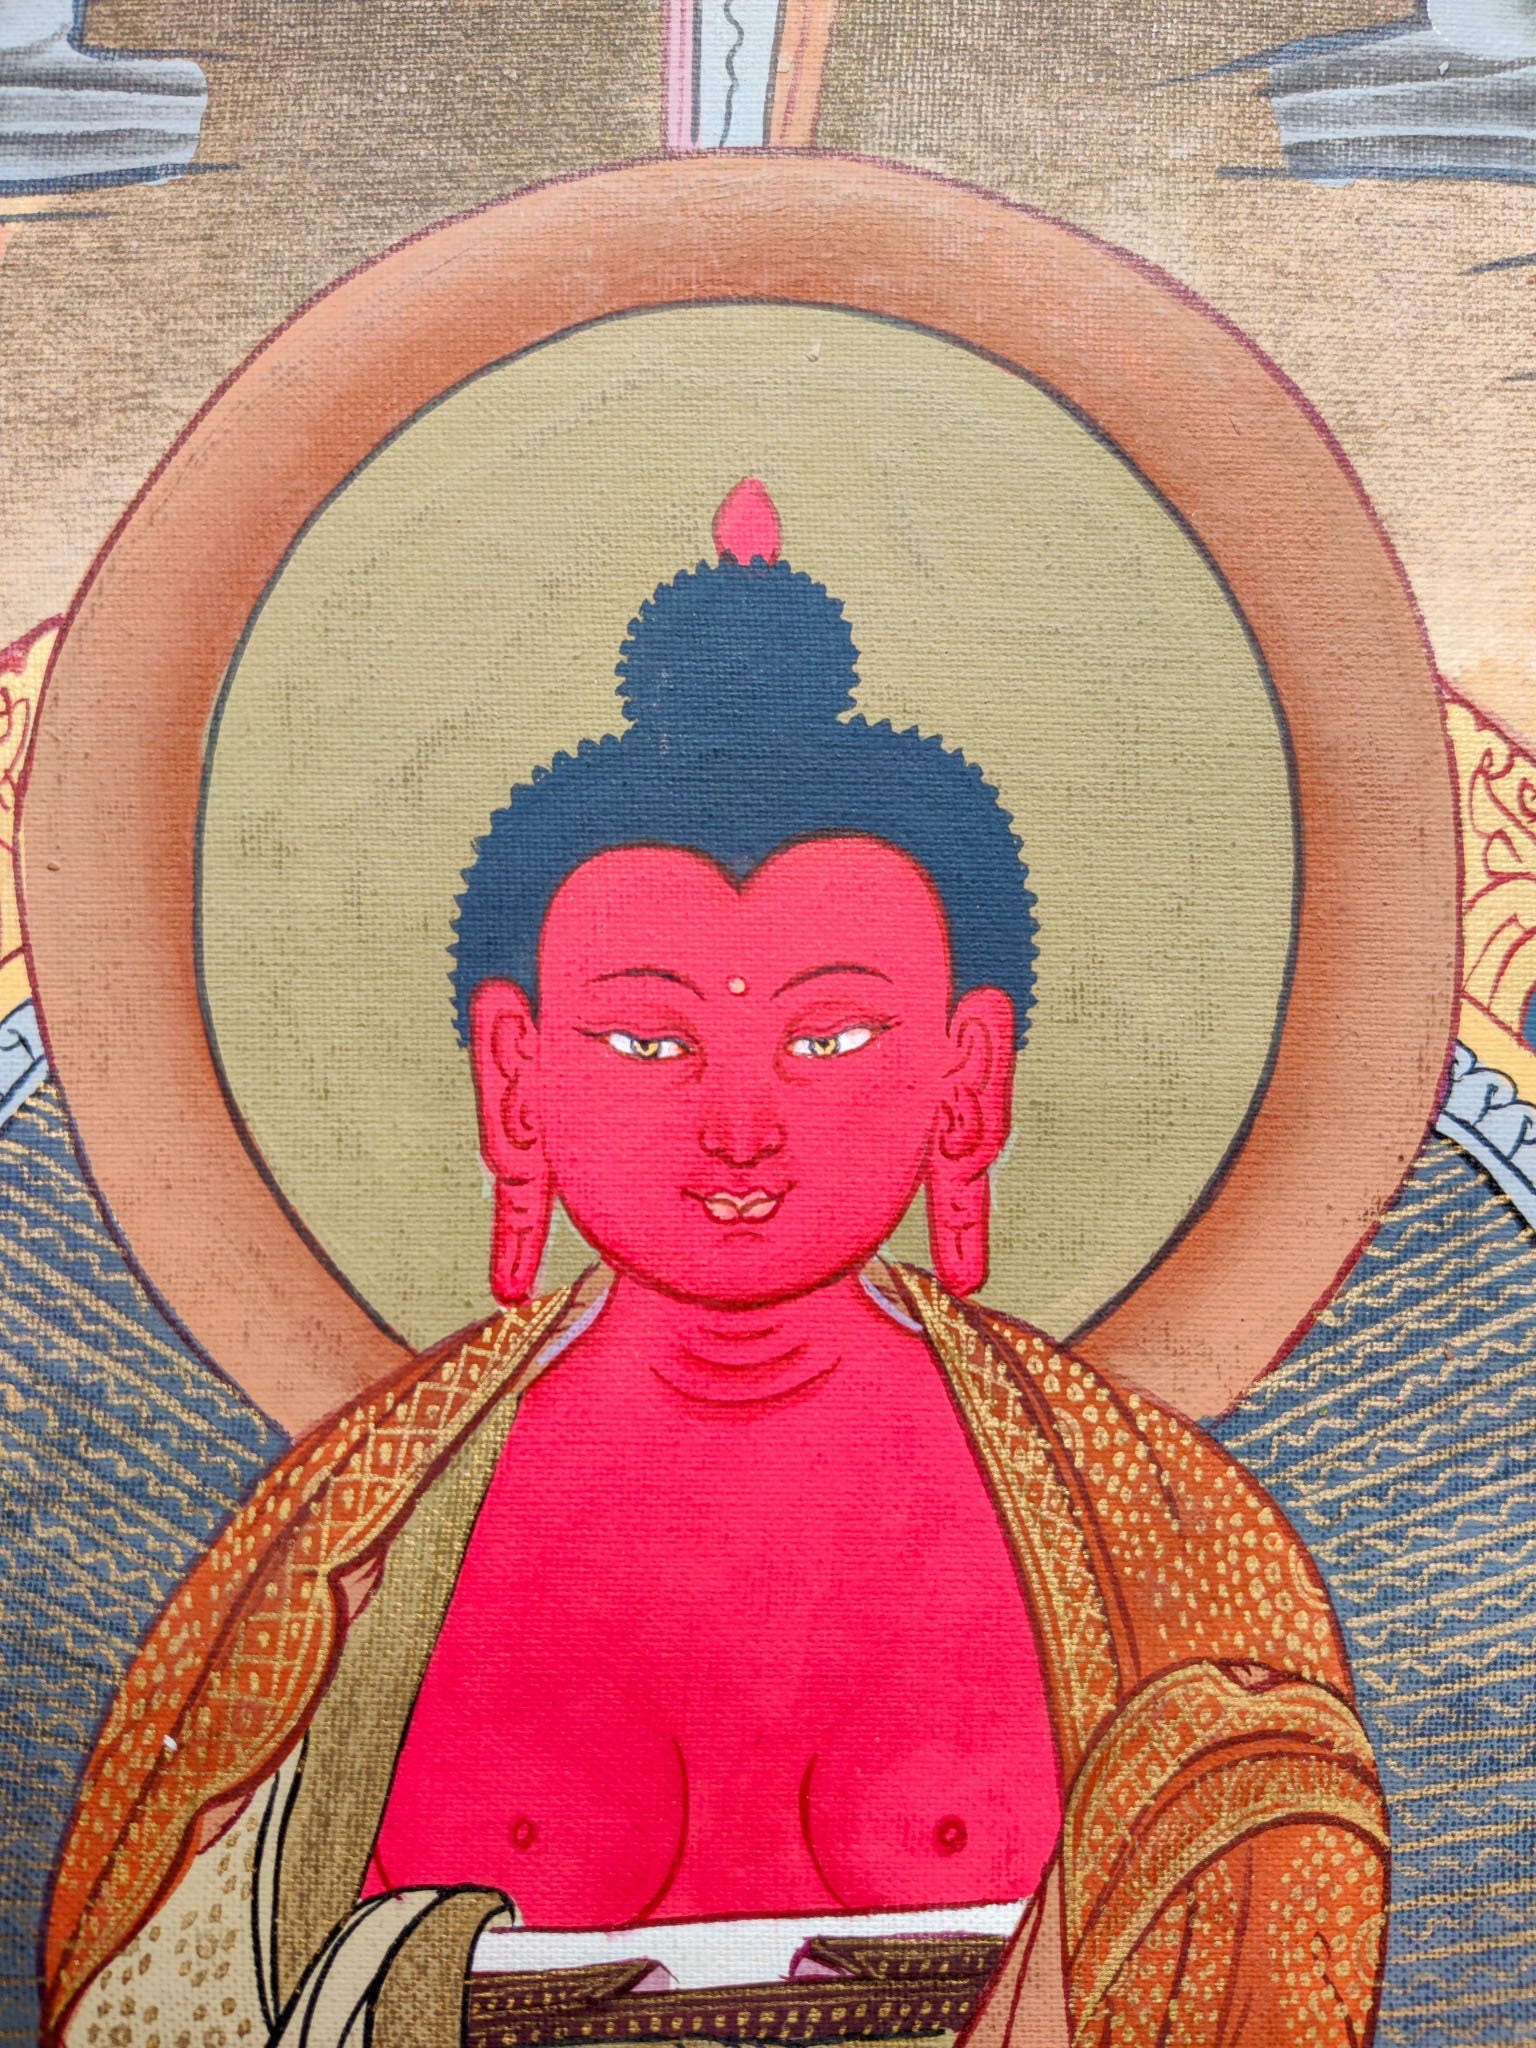 Namo Amitabho Buddha - Lucky Thanka